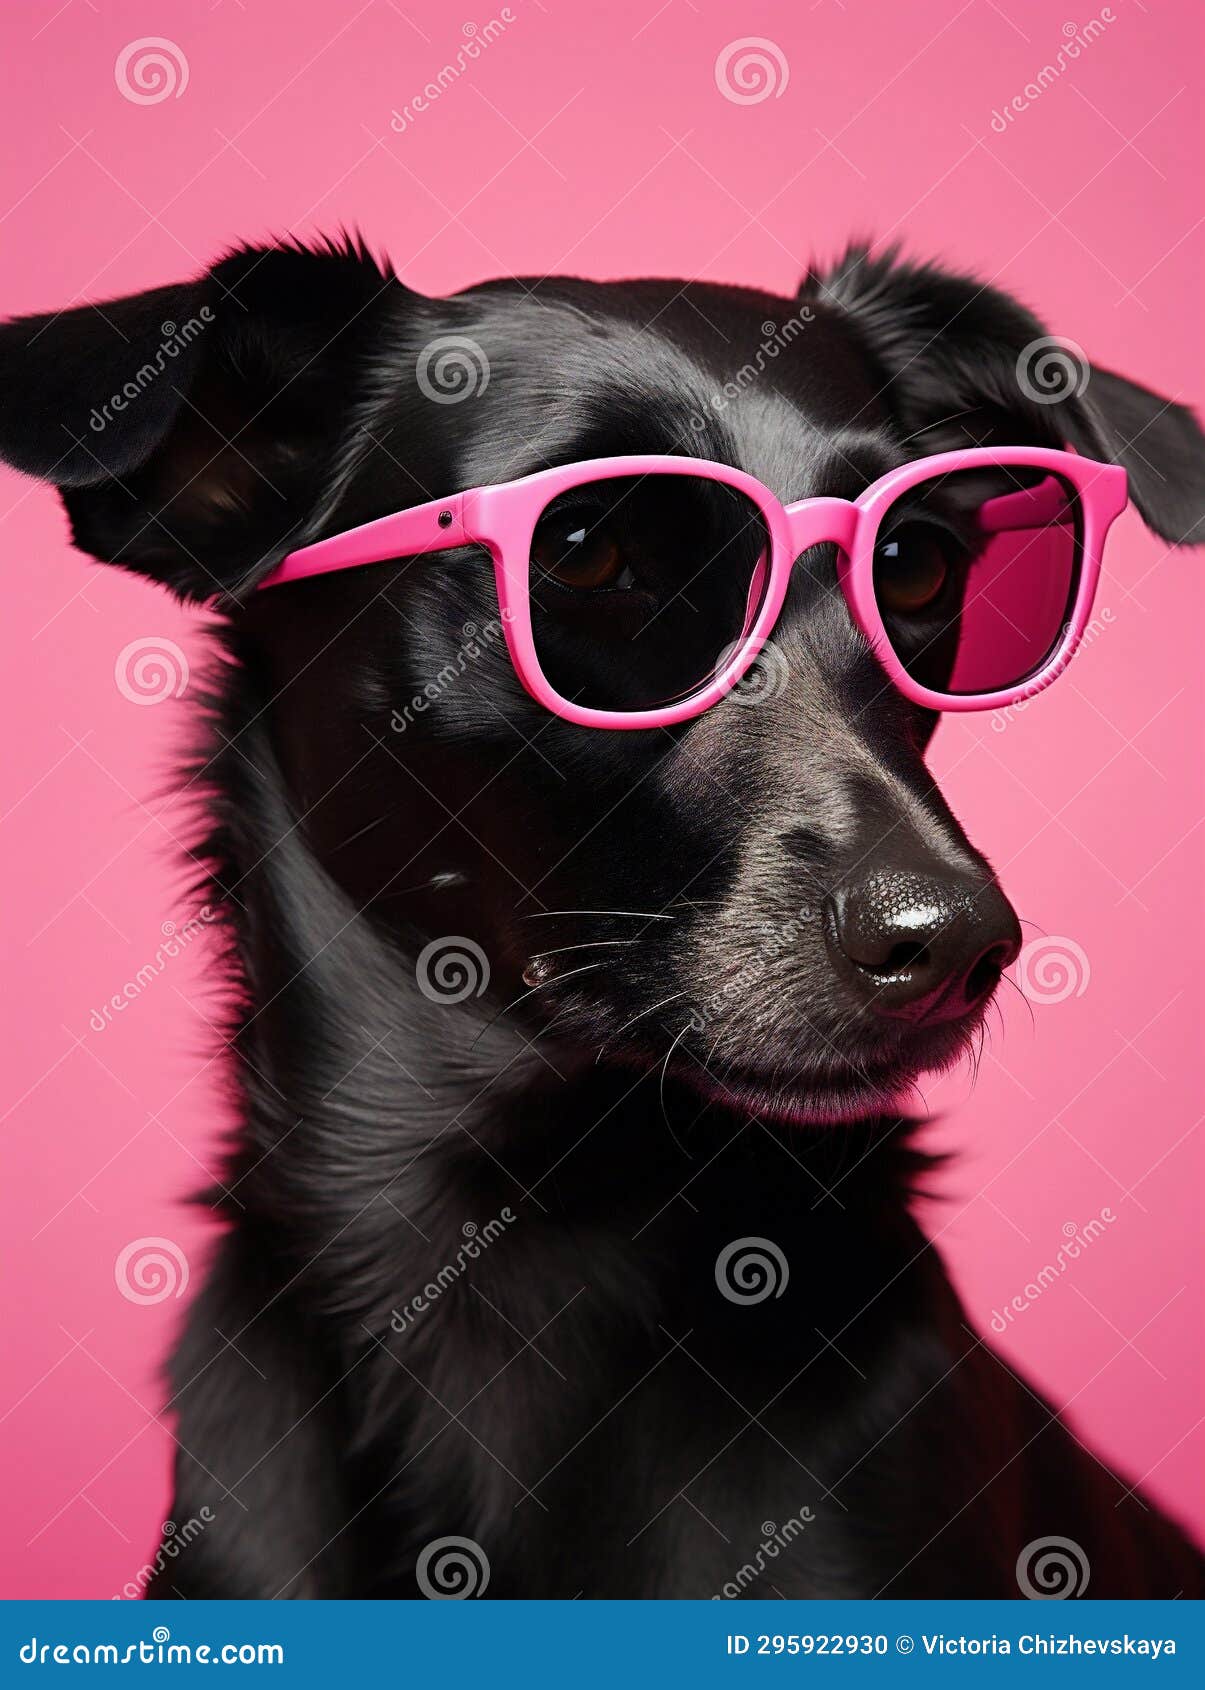 pet dog cute breed portrait sunglasses purebred puppy adorable funny animal